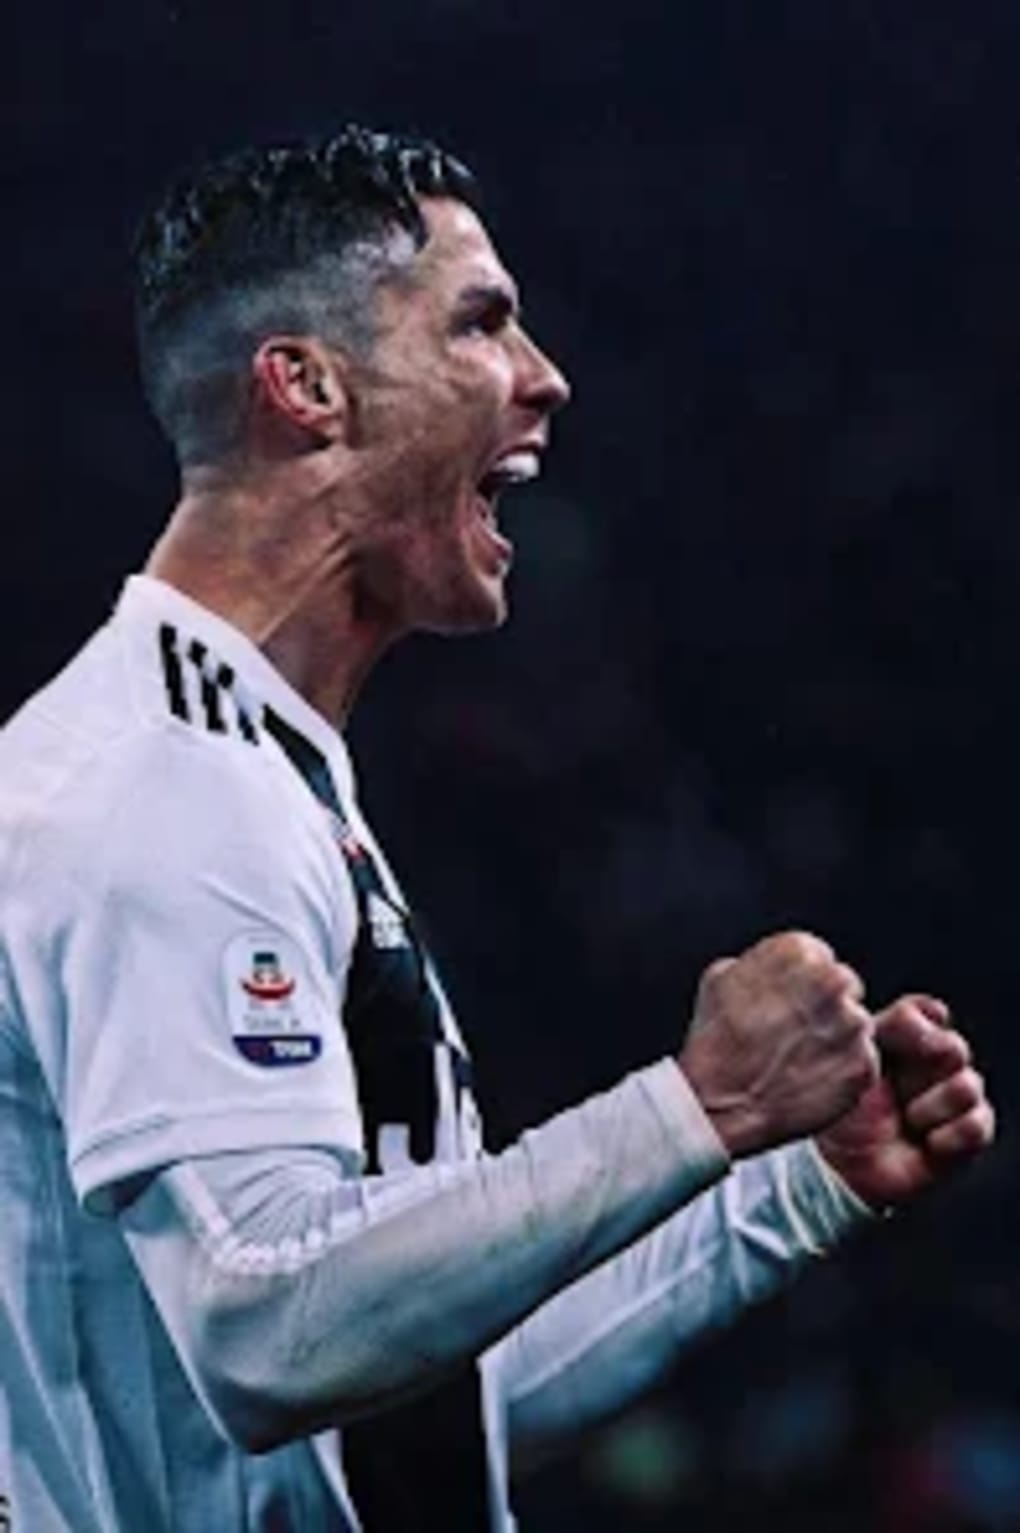 Cristiano Ronaldo celebrating a goal during a soccer match - Cristiano Ronaldo